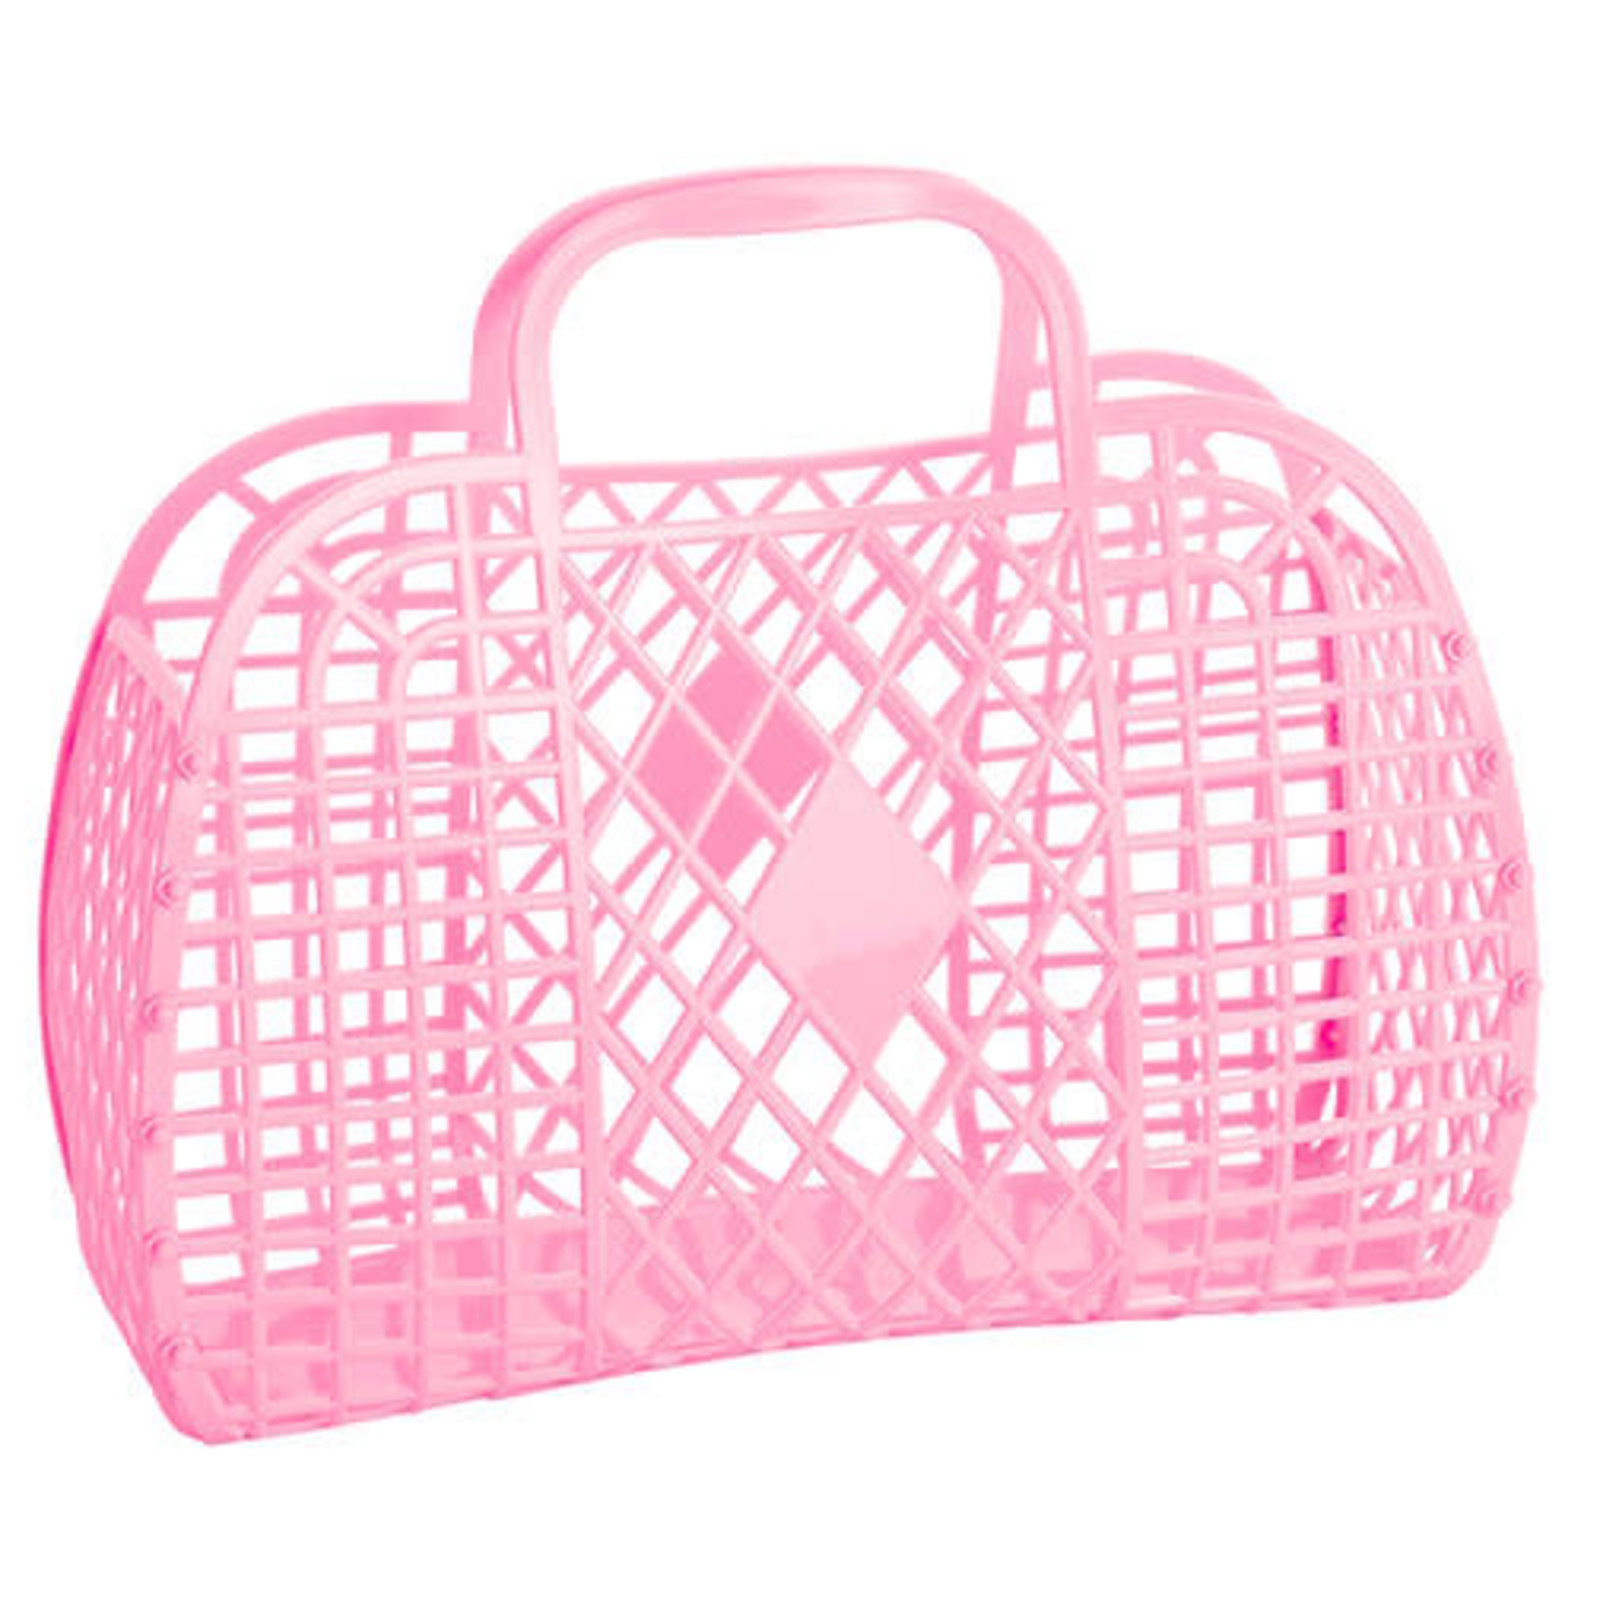 Sunjellies Sunjellies Retro Basket Large Bubblegum Pink